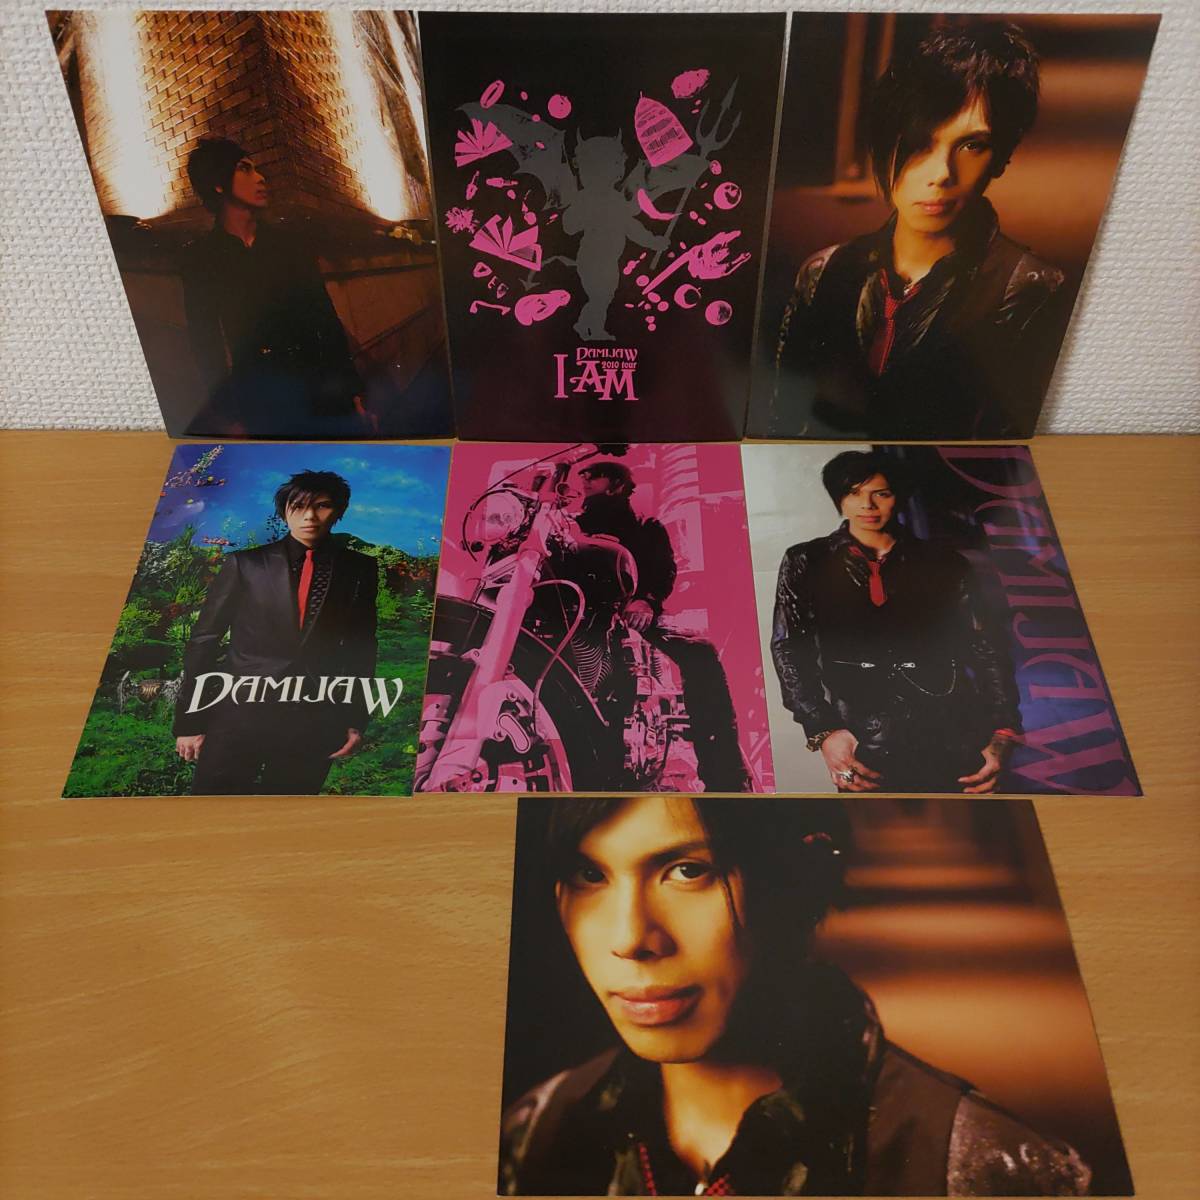 Редка ☆ Damijaw Postcard 7 Set ☆ 2010 Тур "I Am Am" Янна да Арк Арк Басист Пост -карта не продается кислотная черная вишня